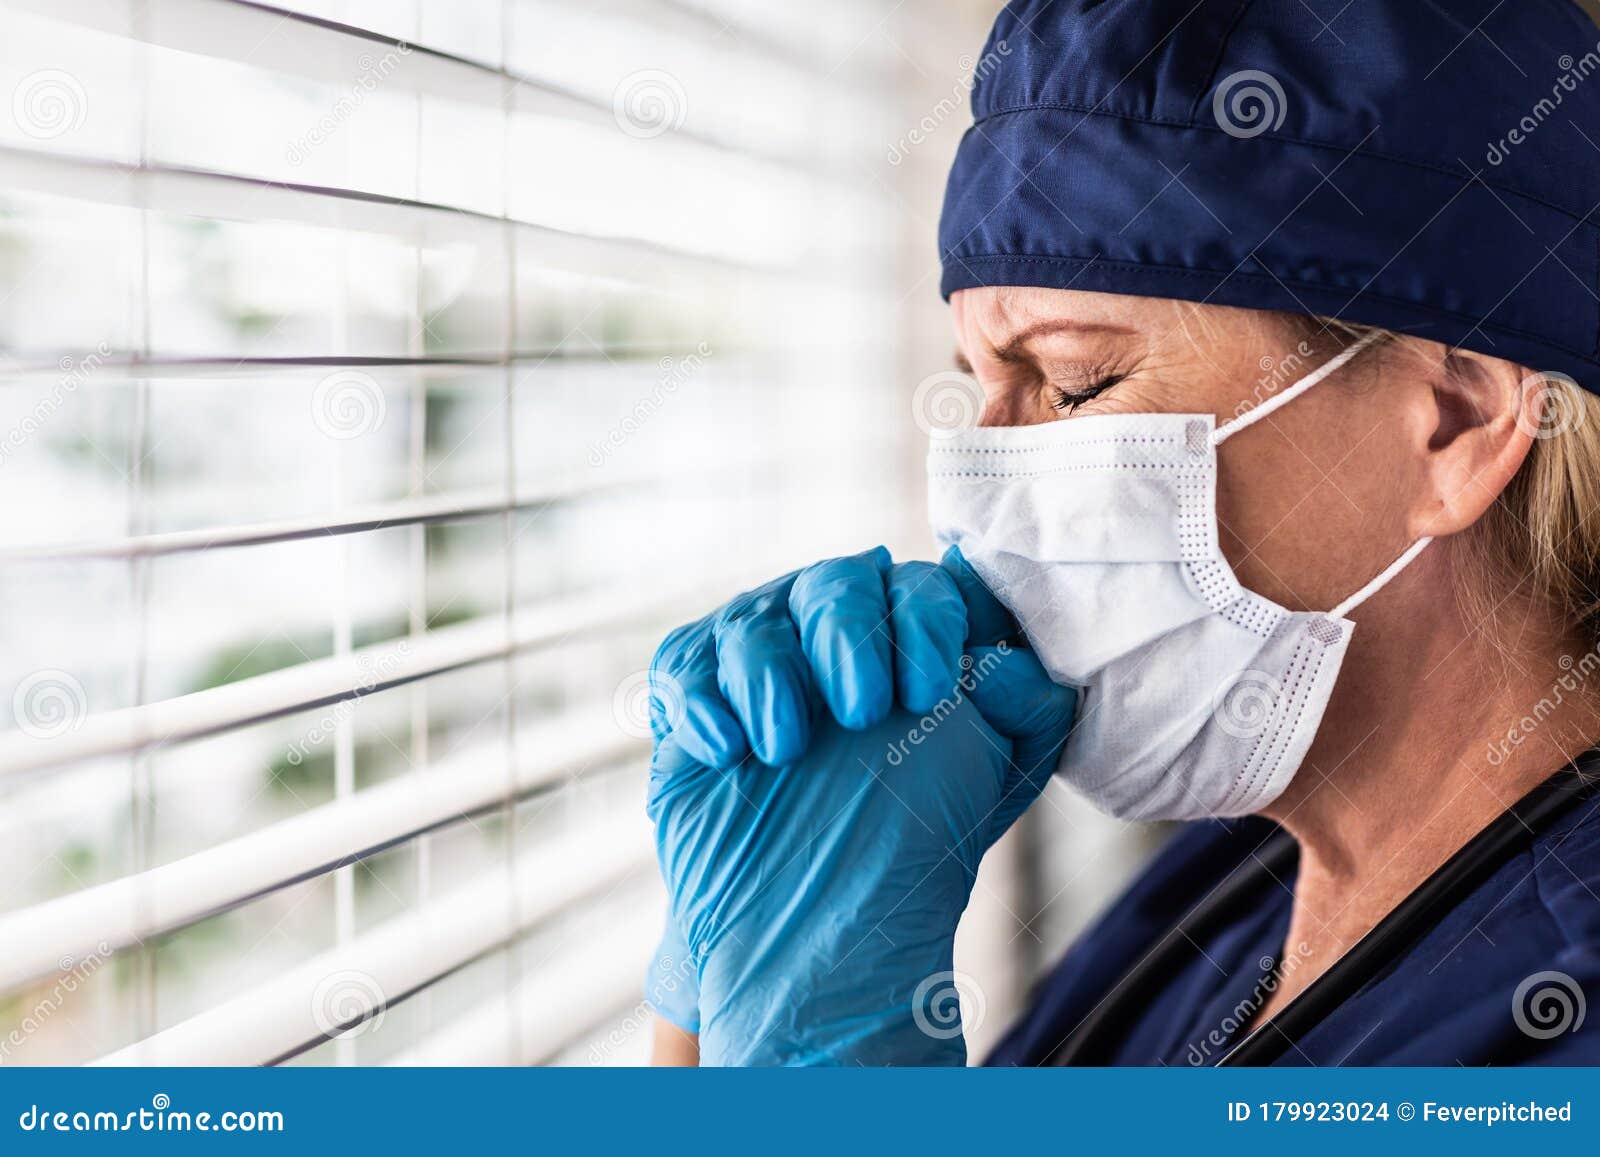 prayerful stressed female doctor or nurse on break at window wearing medical face mask